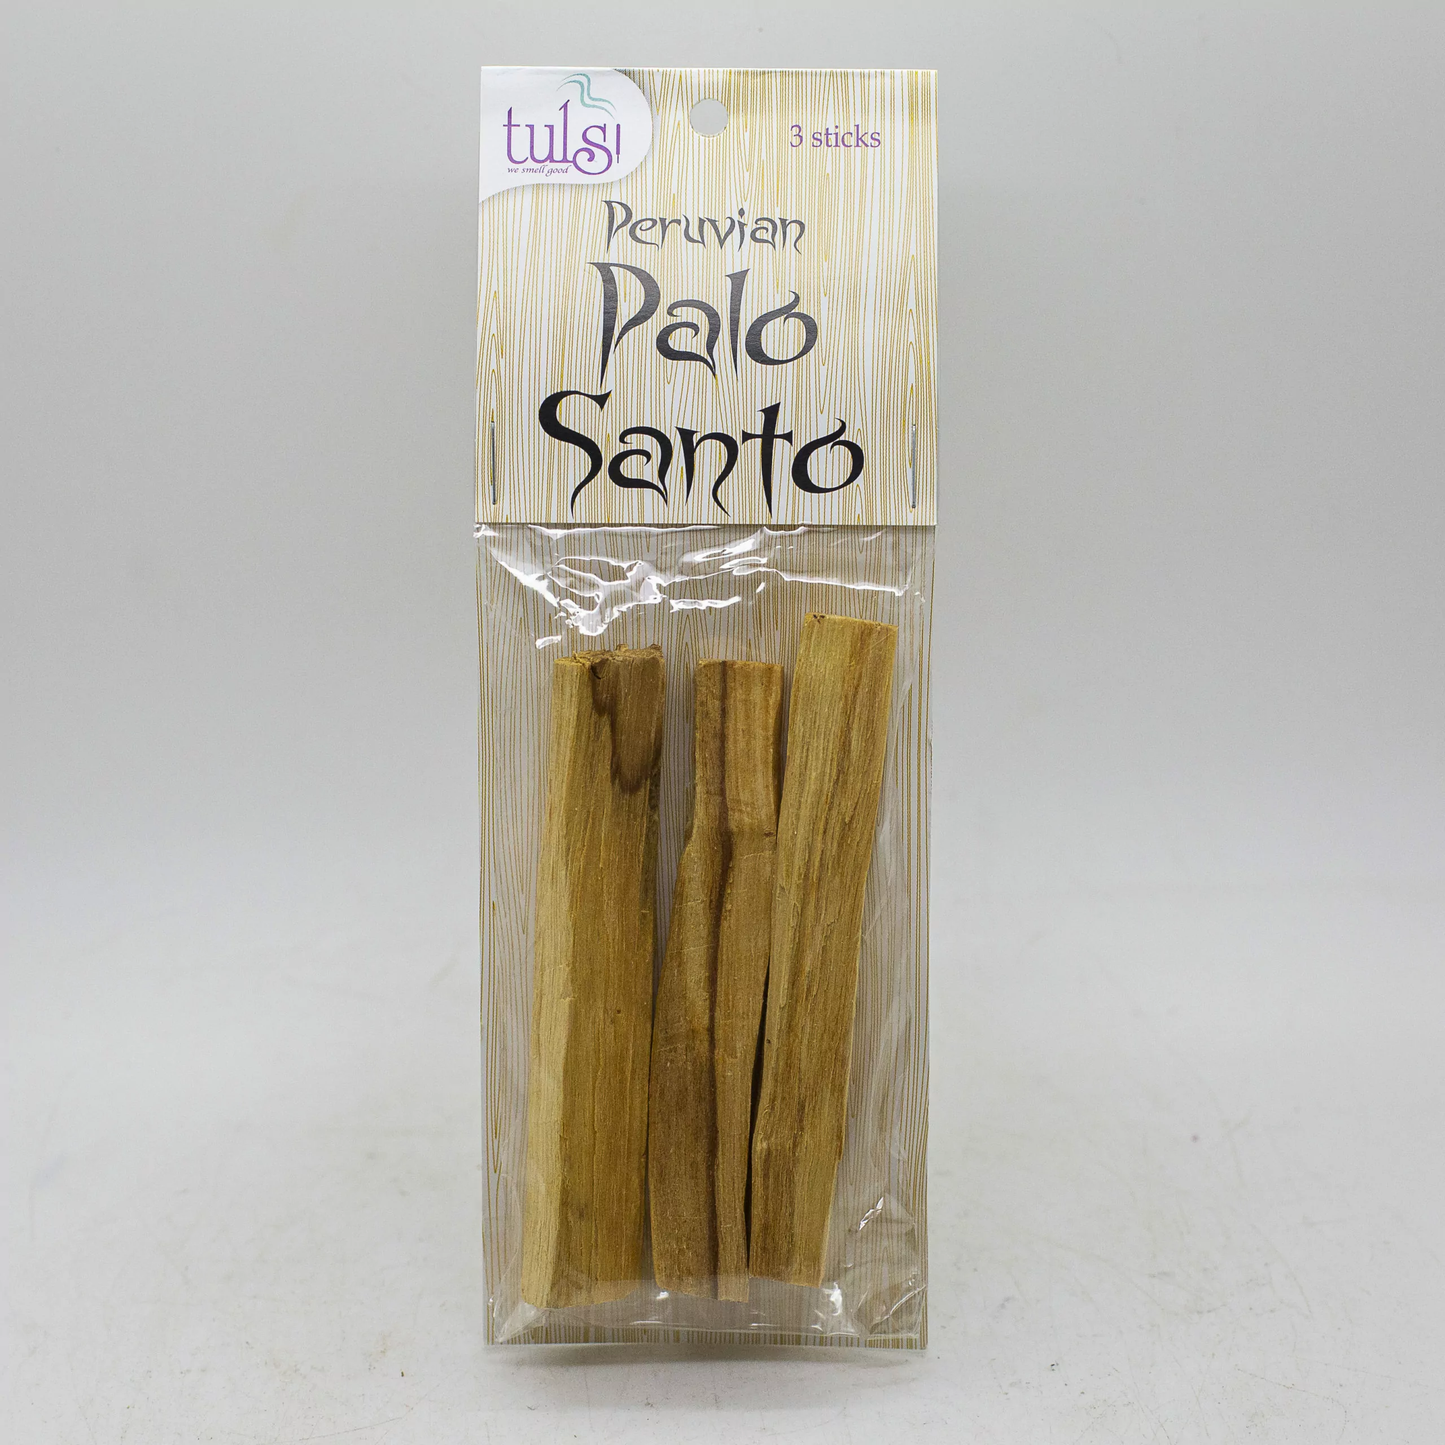 Tulsi Peruvian Palo Santo Sticks, 3 Sticks